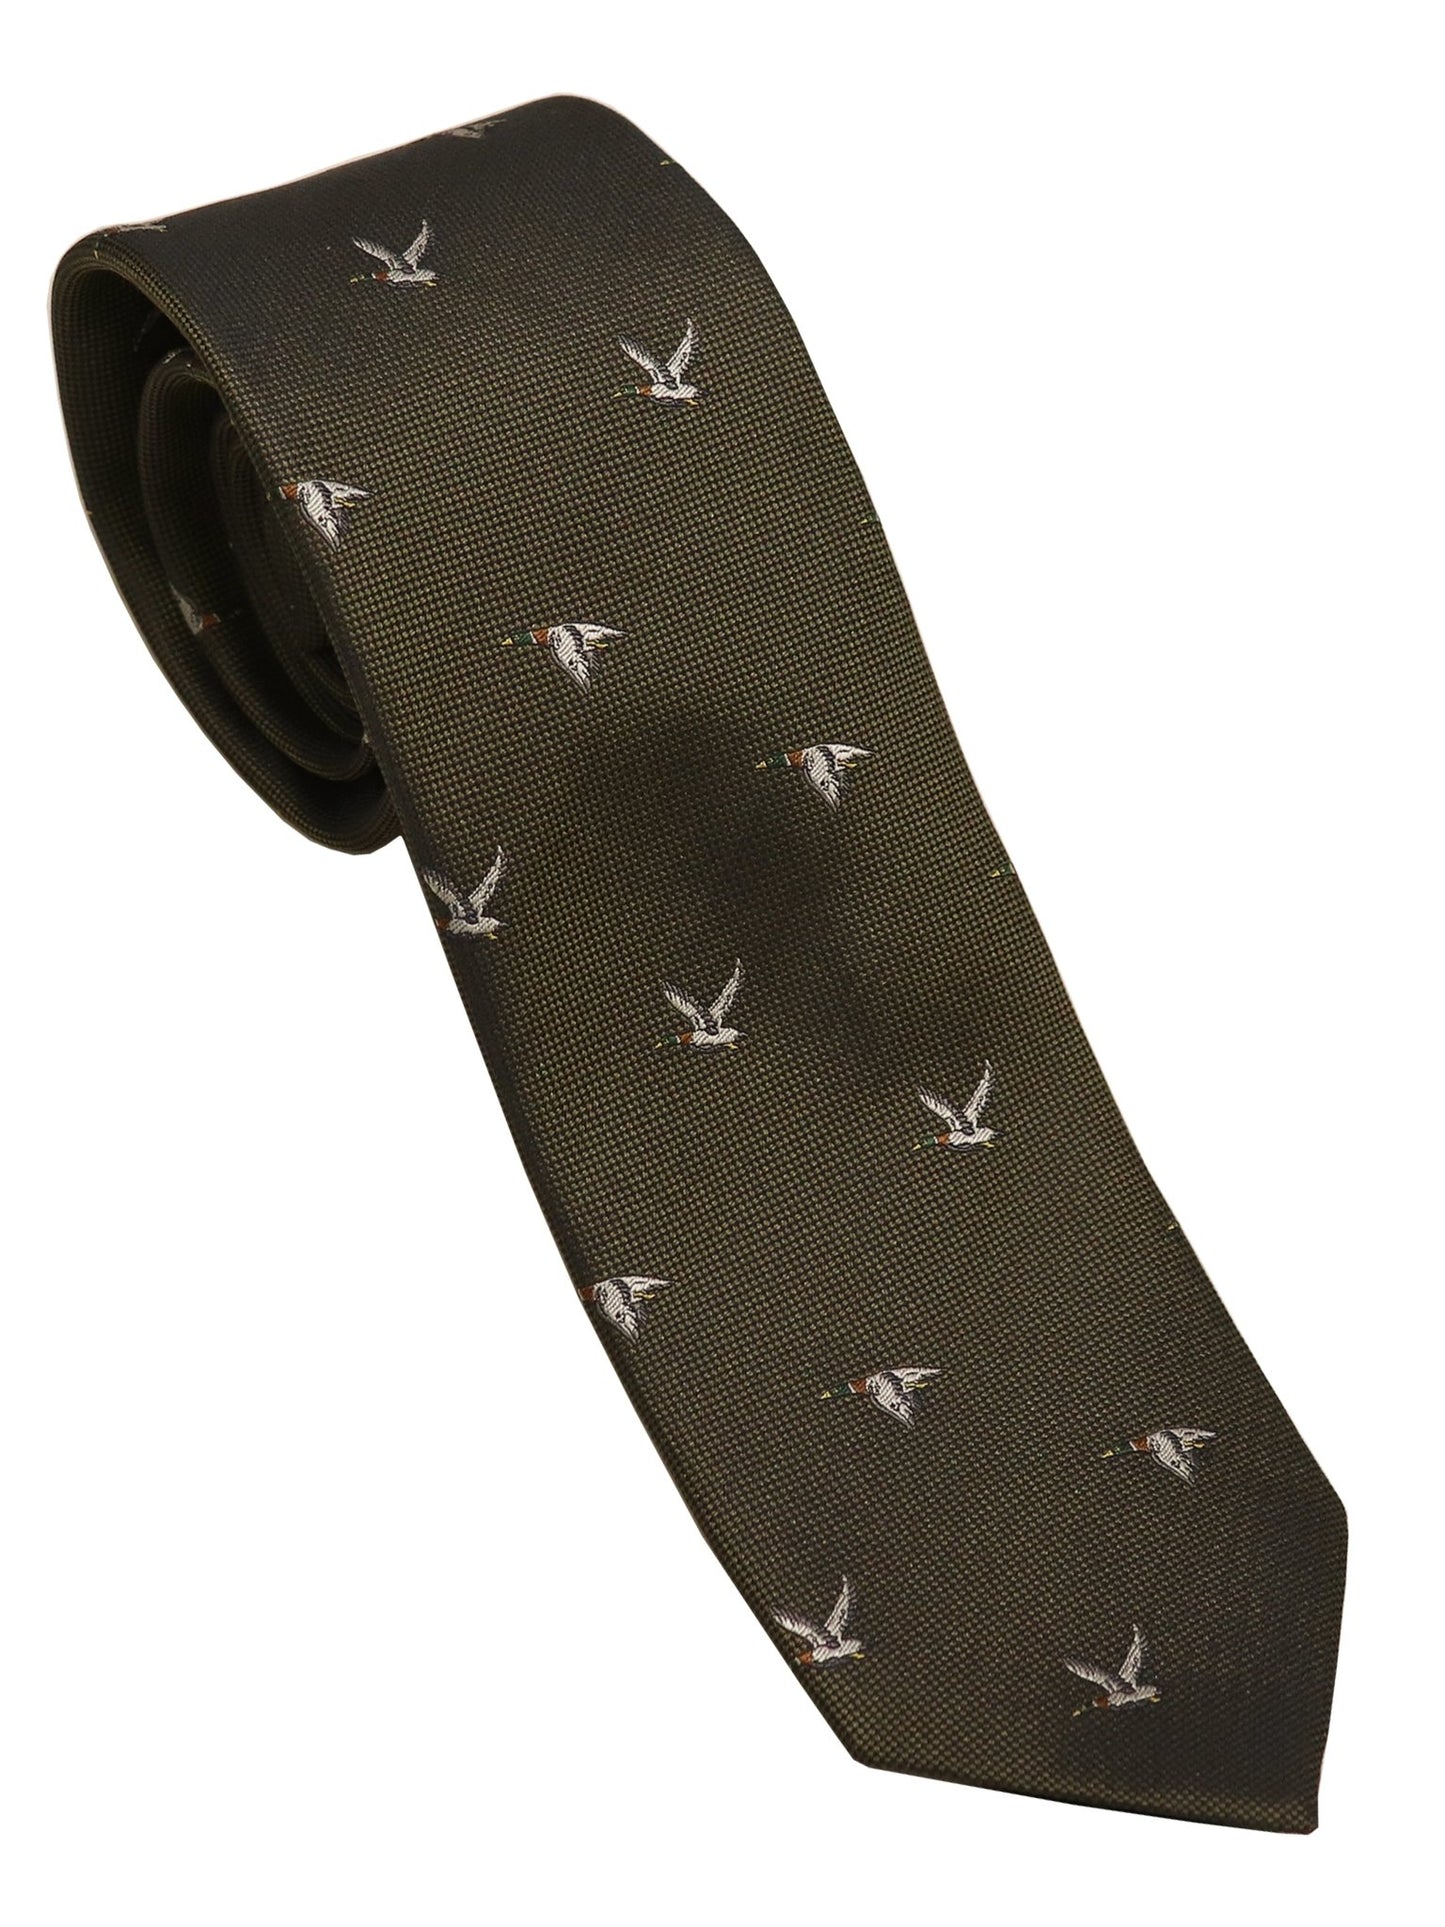 Harry Knight Esq. Duck Tie - Thomson's Suits Ltd - Olive - - 46947